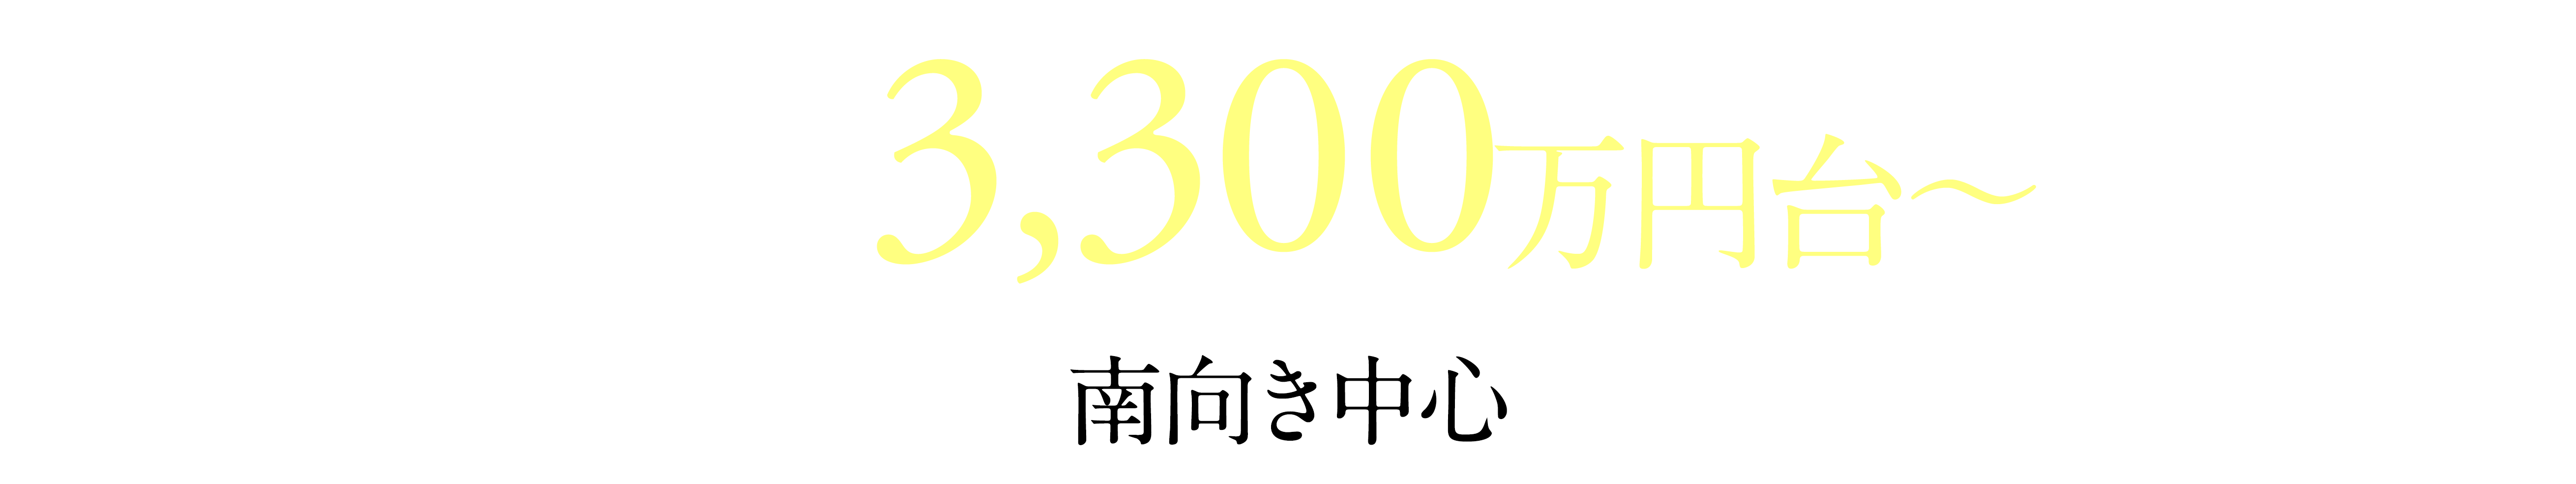 3LDK3,398万円～4,398万円